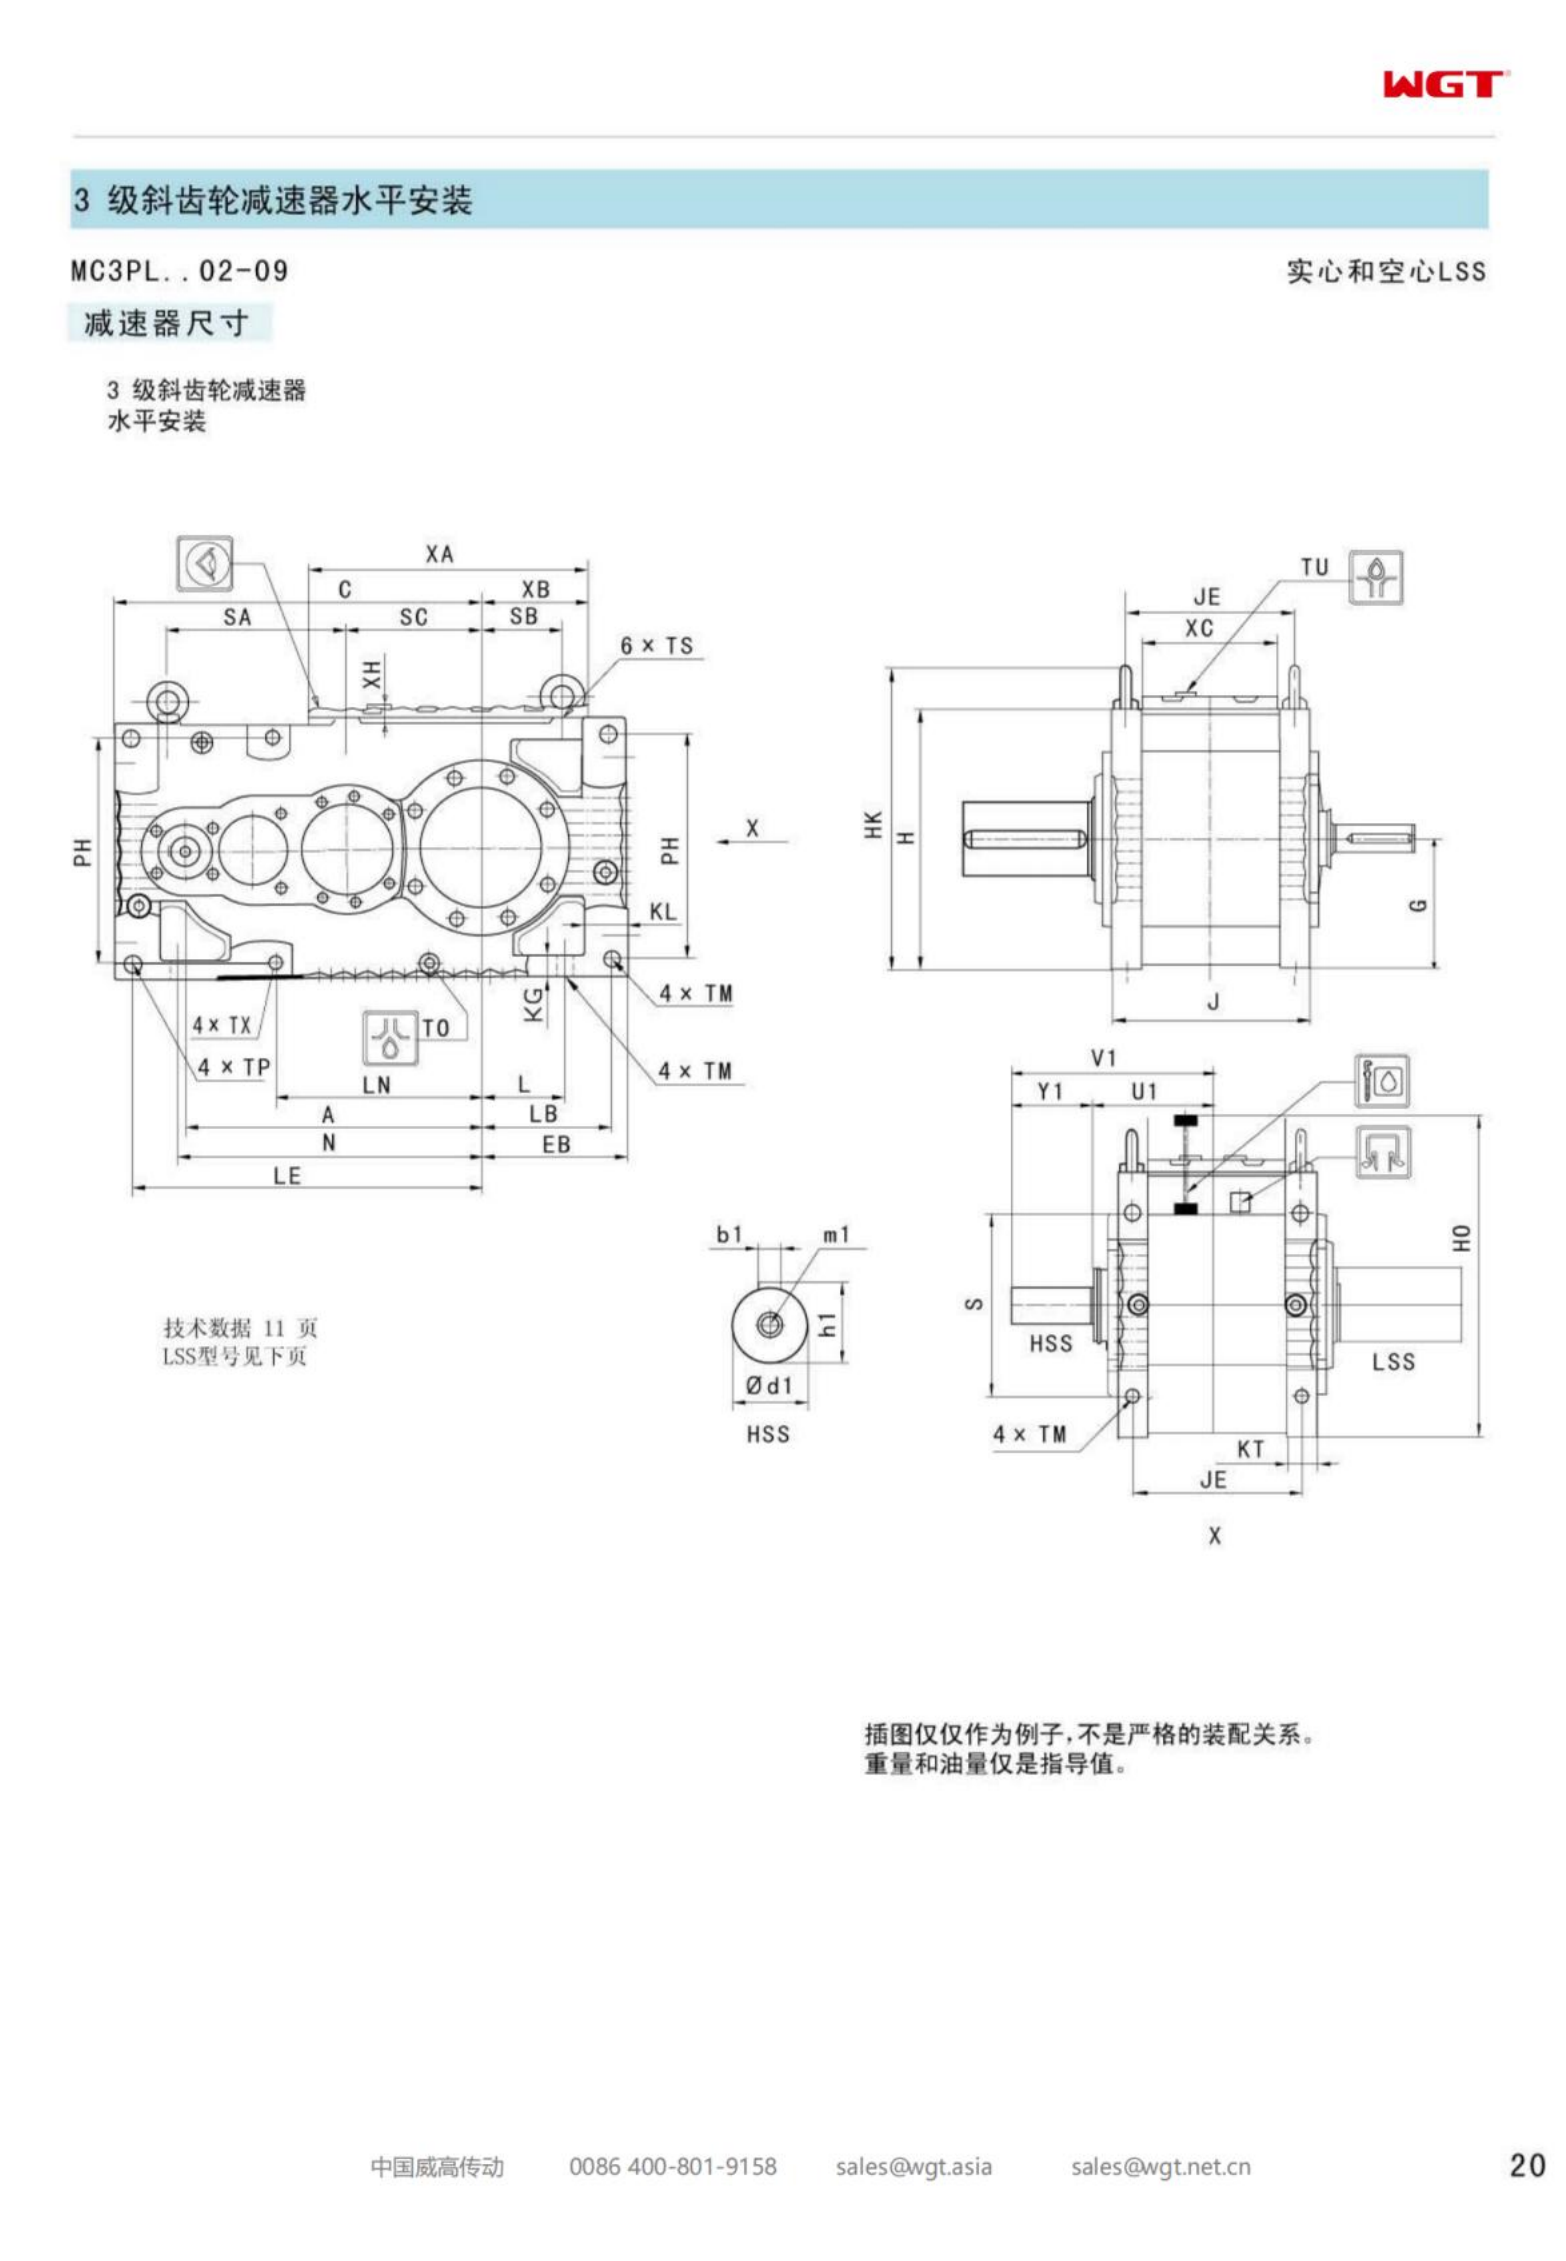 MC3PLSF02 replaces _SEW_MC_Series gearbox (patent)